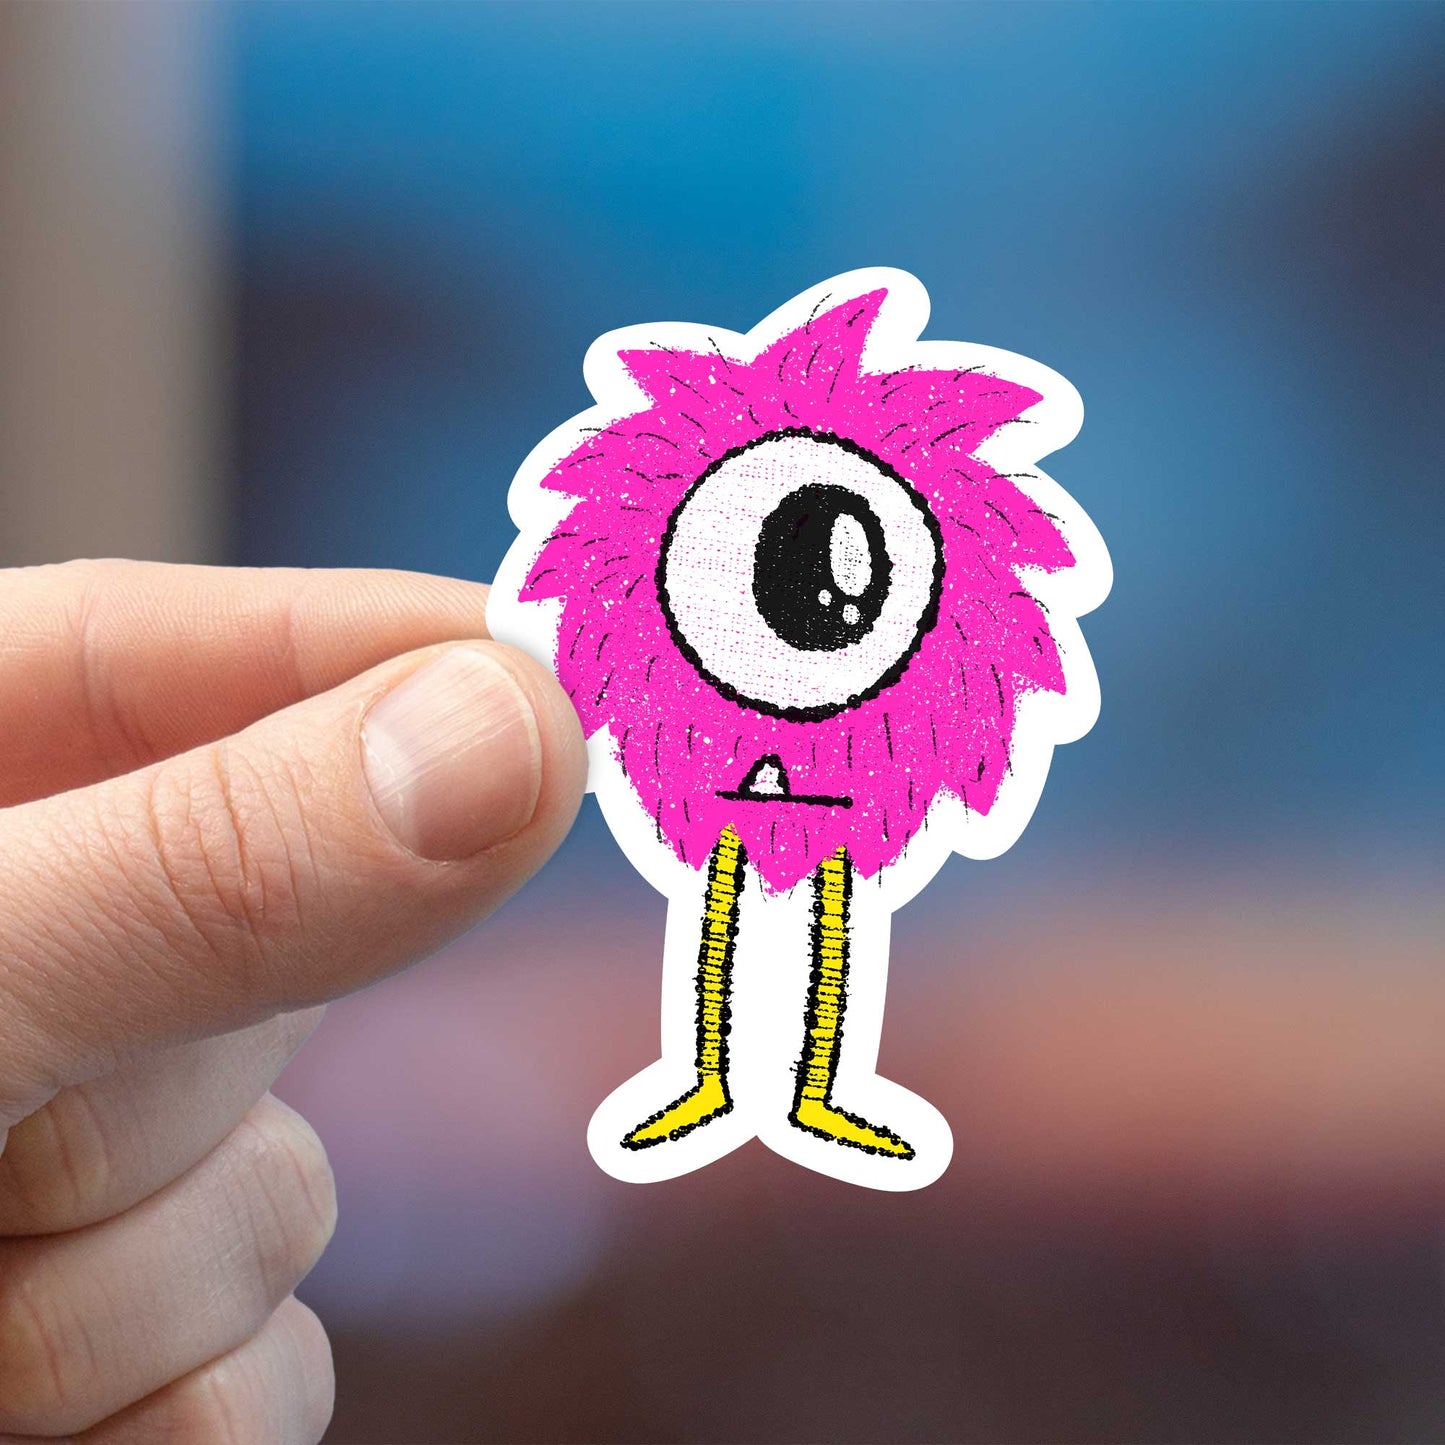 Jimmy the Pink Fuzzy Monster Sticker